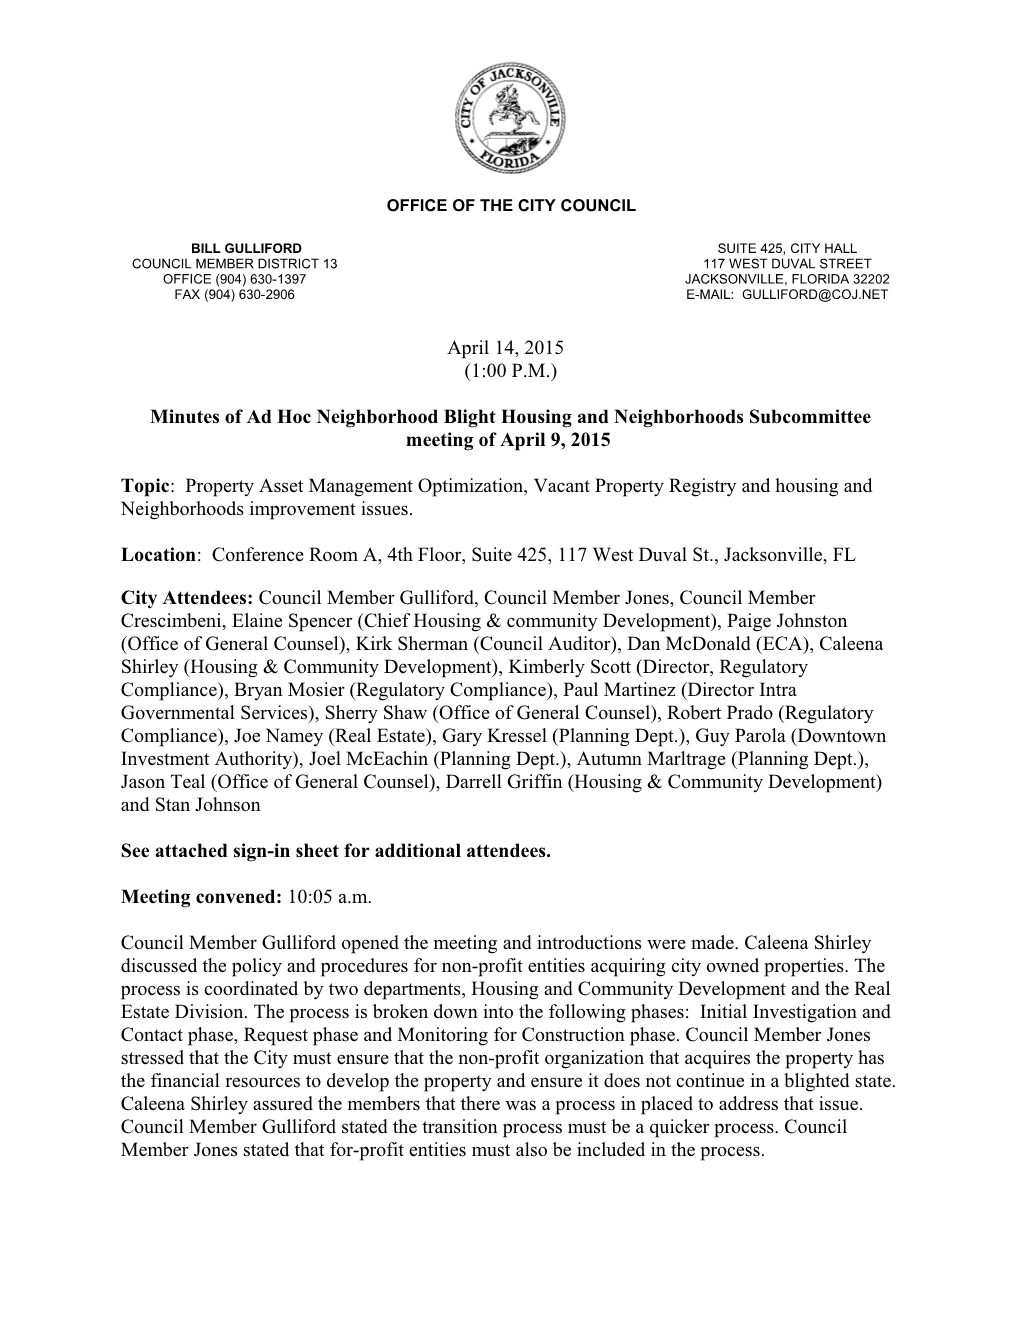 Minutes of Ad Hoc Neighborhood Blight Housing and Neighborhoods Subcommittee Meetingof